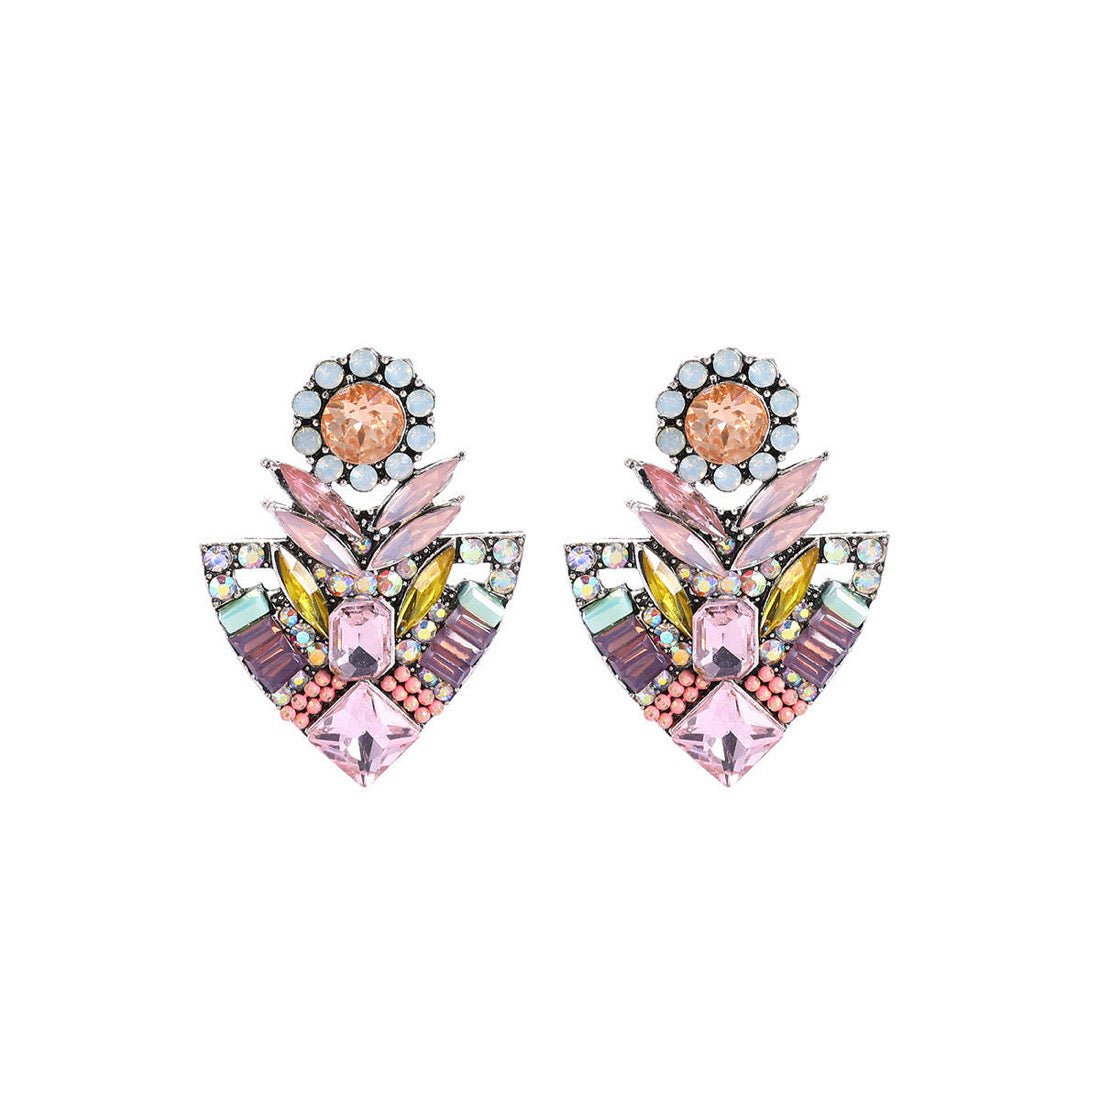 Tiffany Earrings - Coco & Cali